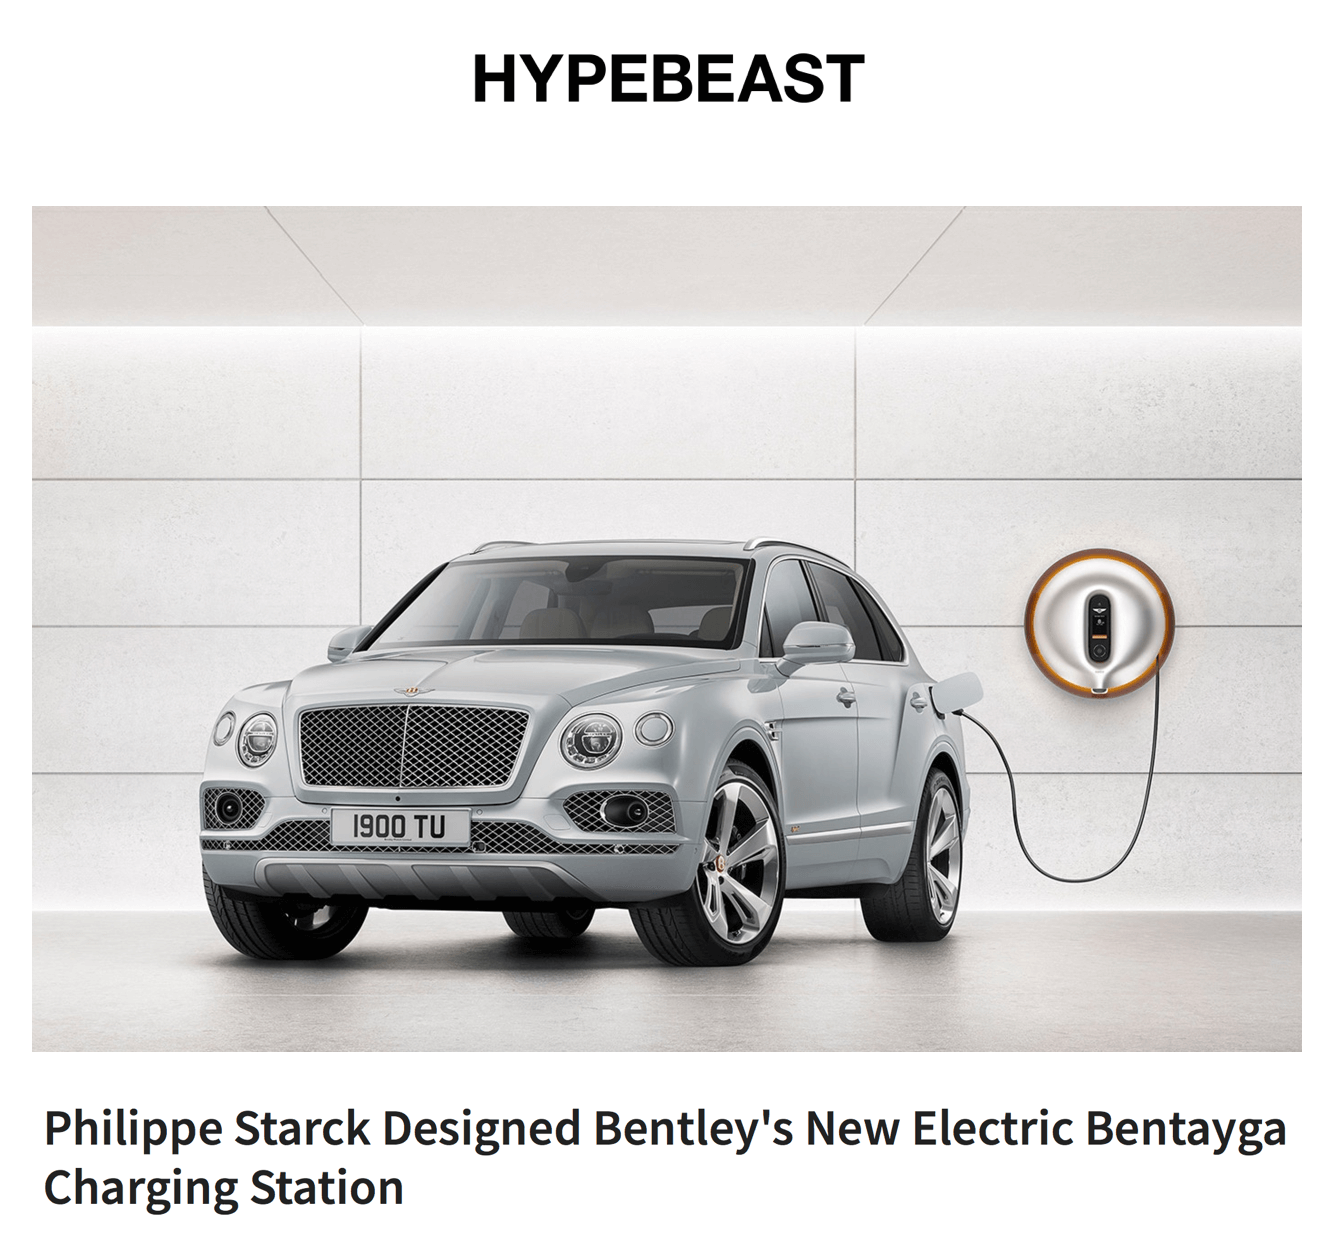 Philippe Starck Designed Bentley's New Electric Bentayga Charging Station